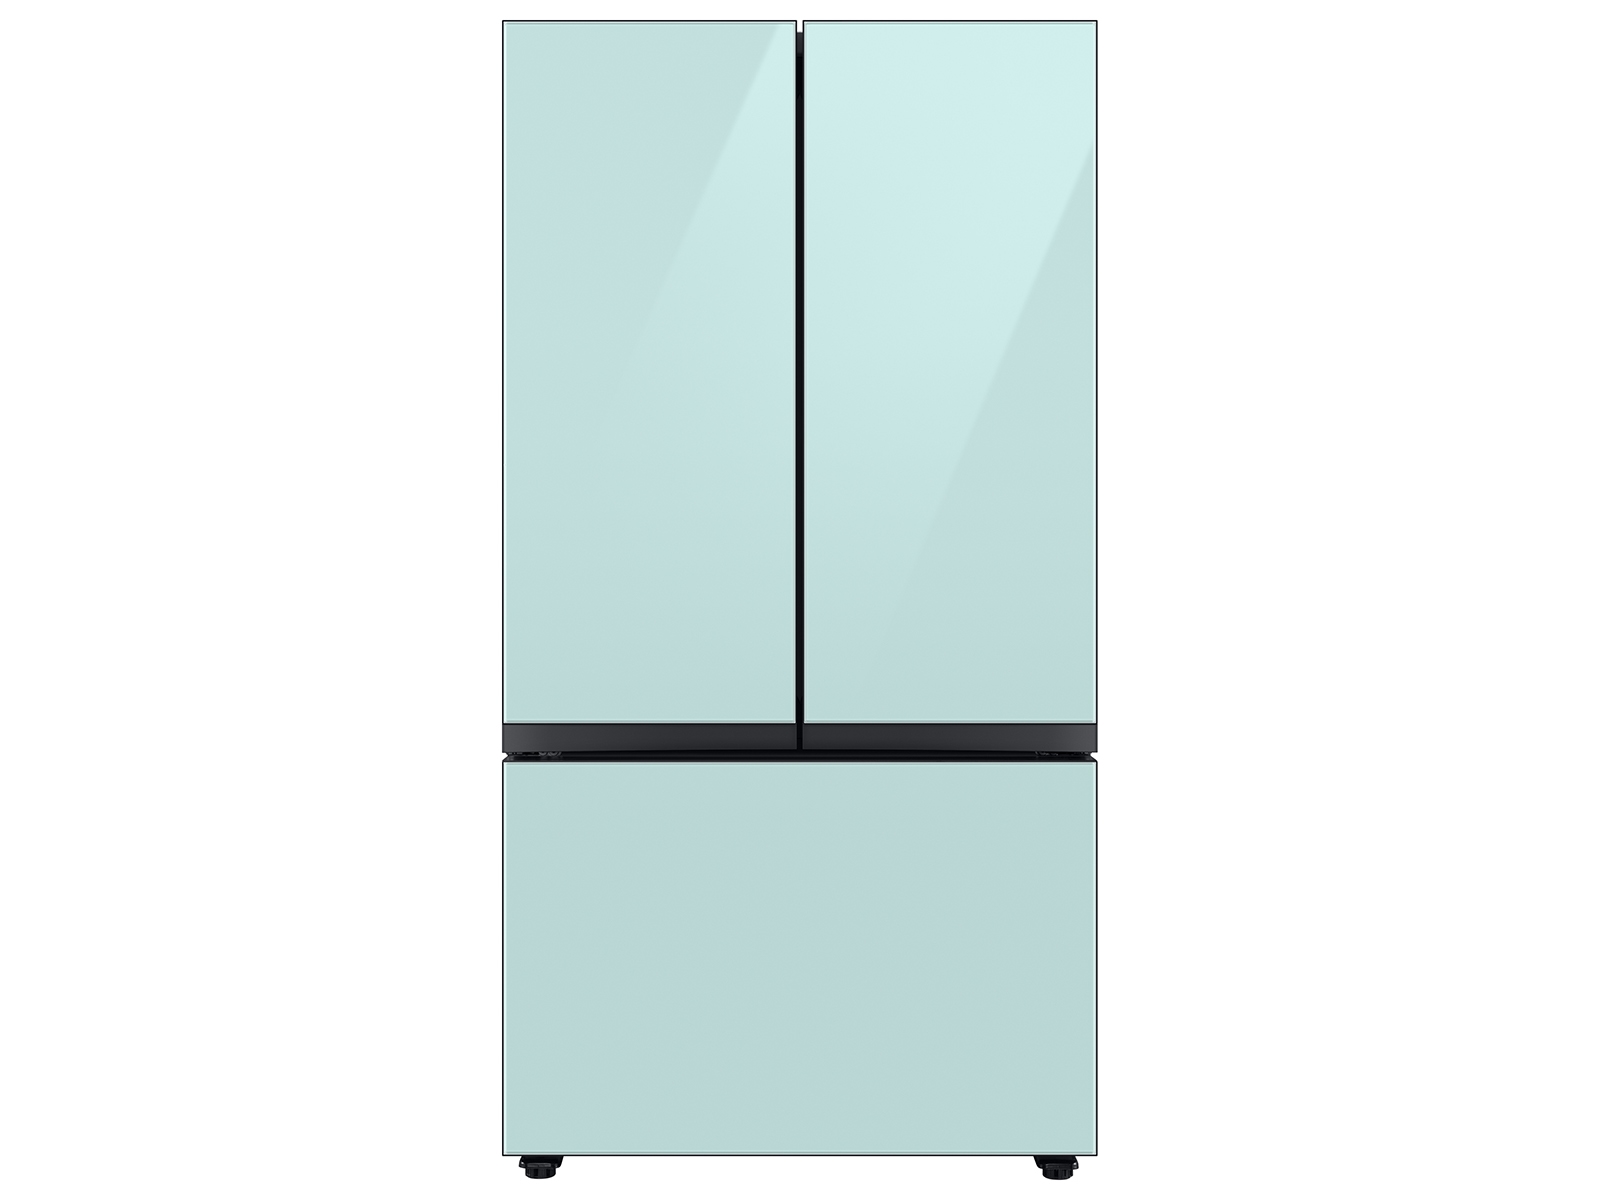 Samsung Bespoke 3-Door French Door Refrigerator in Stainless Steel (30 cu. ft.) with Beverage Center™ in Morning Blue Glass(BNDL-1650312326422)